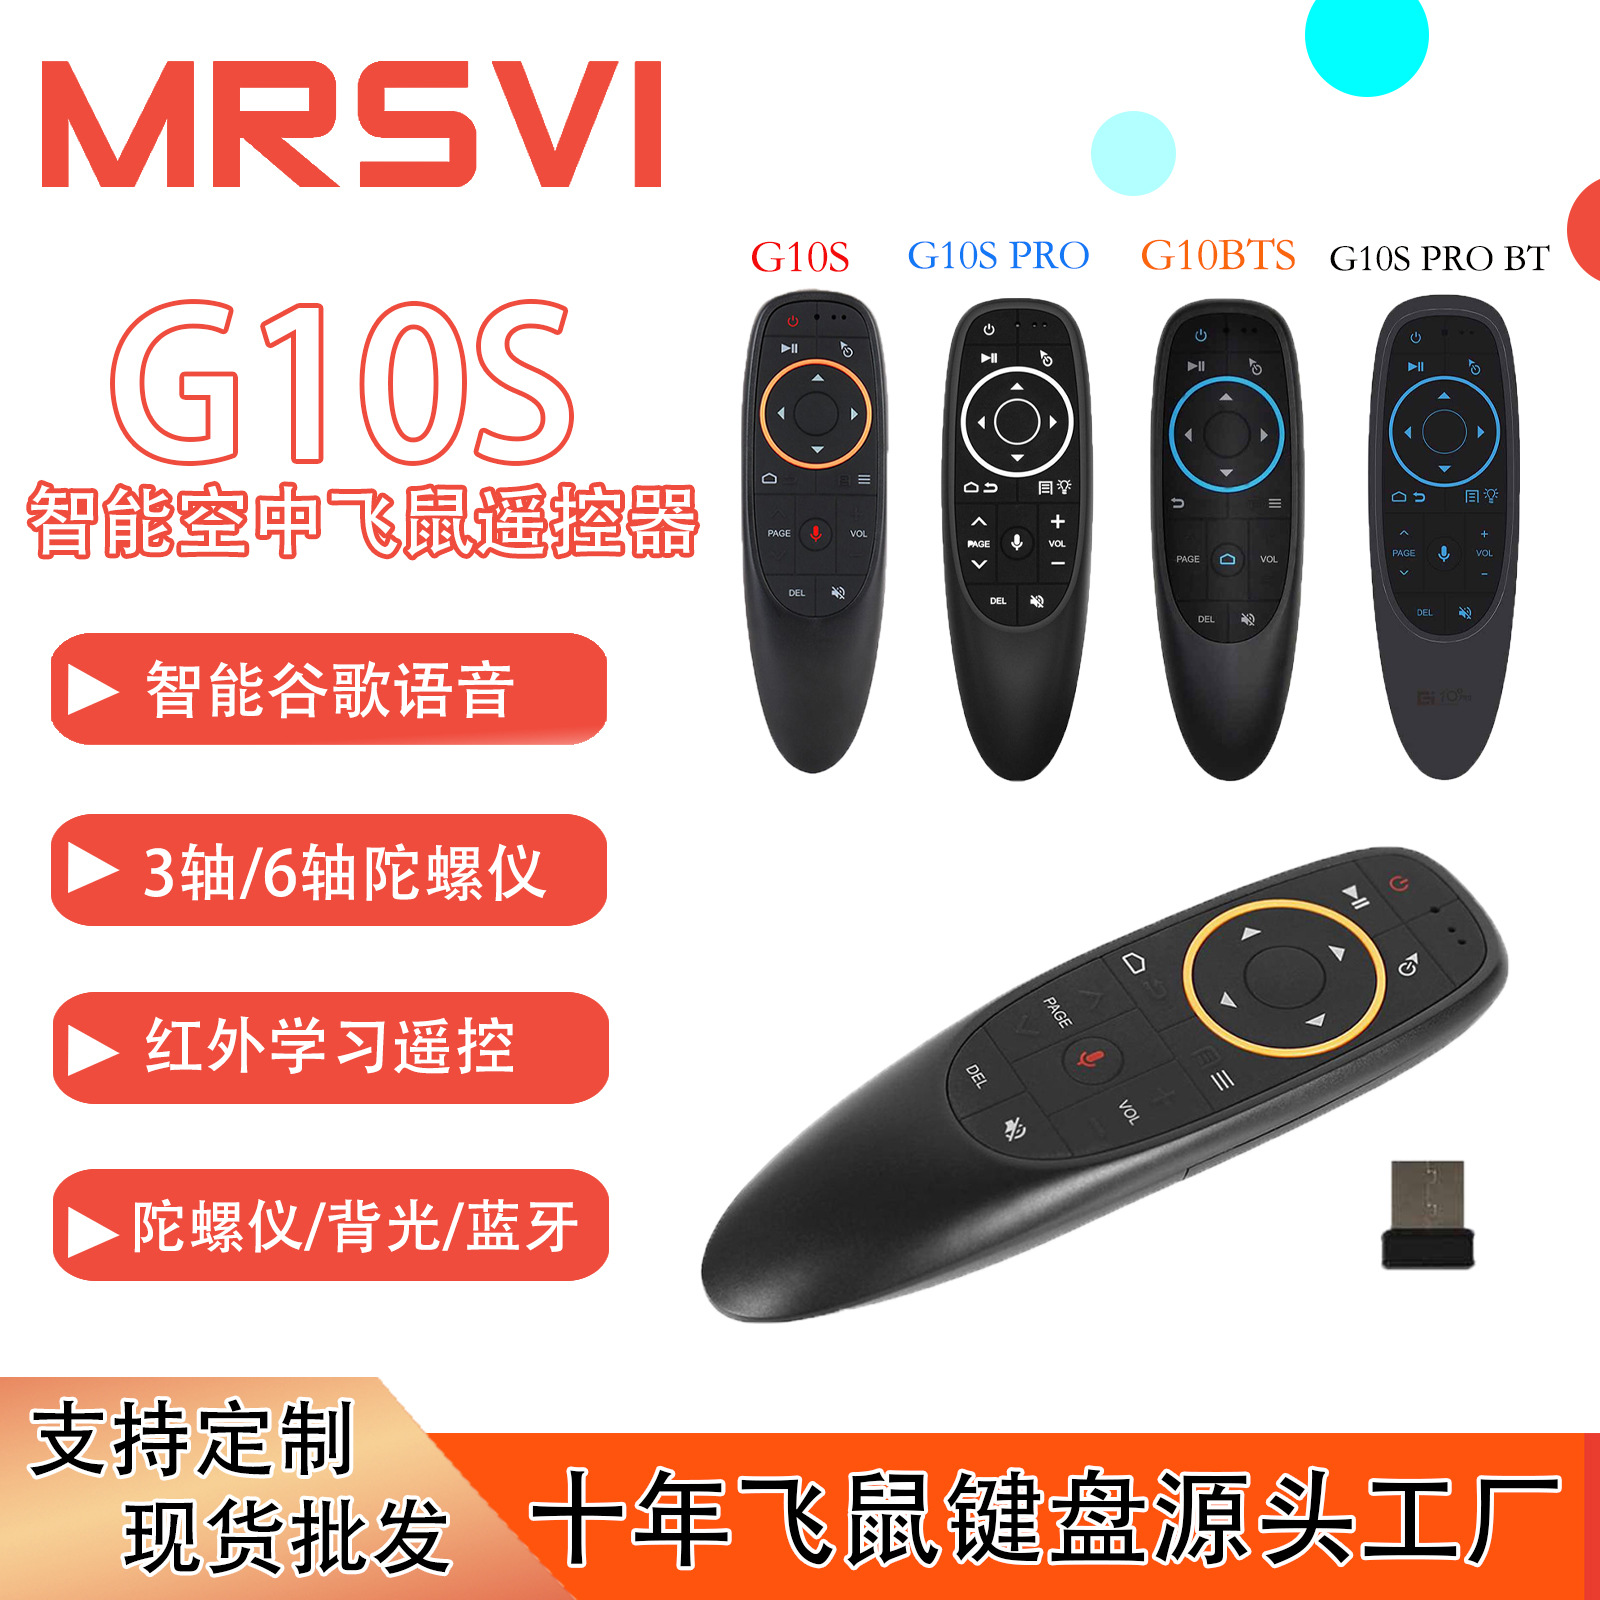 G10S PRO 6轴陀螺仪飞鼠2.4G蓝牙无线红外双模智能语音遥控器电视